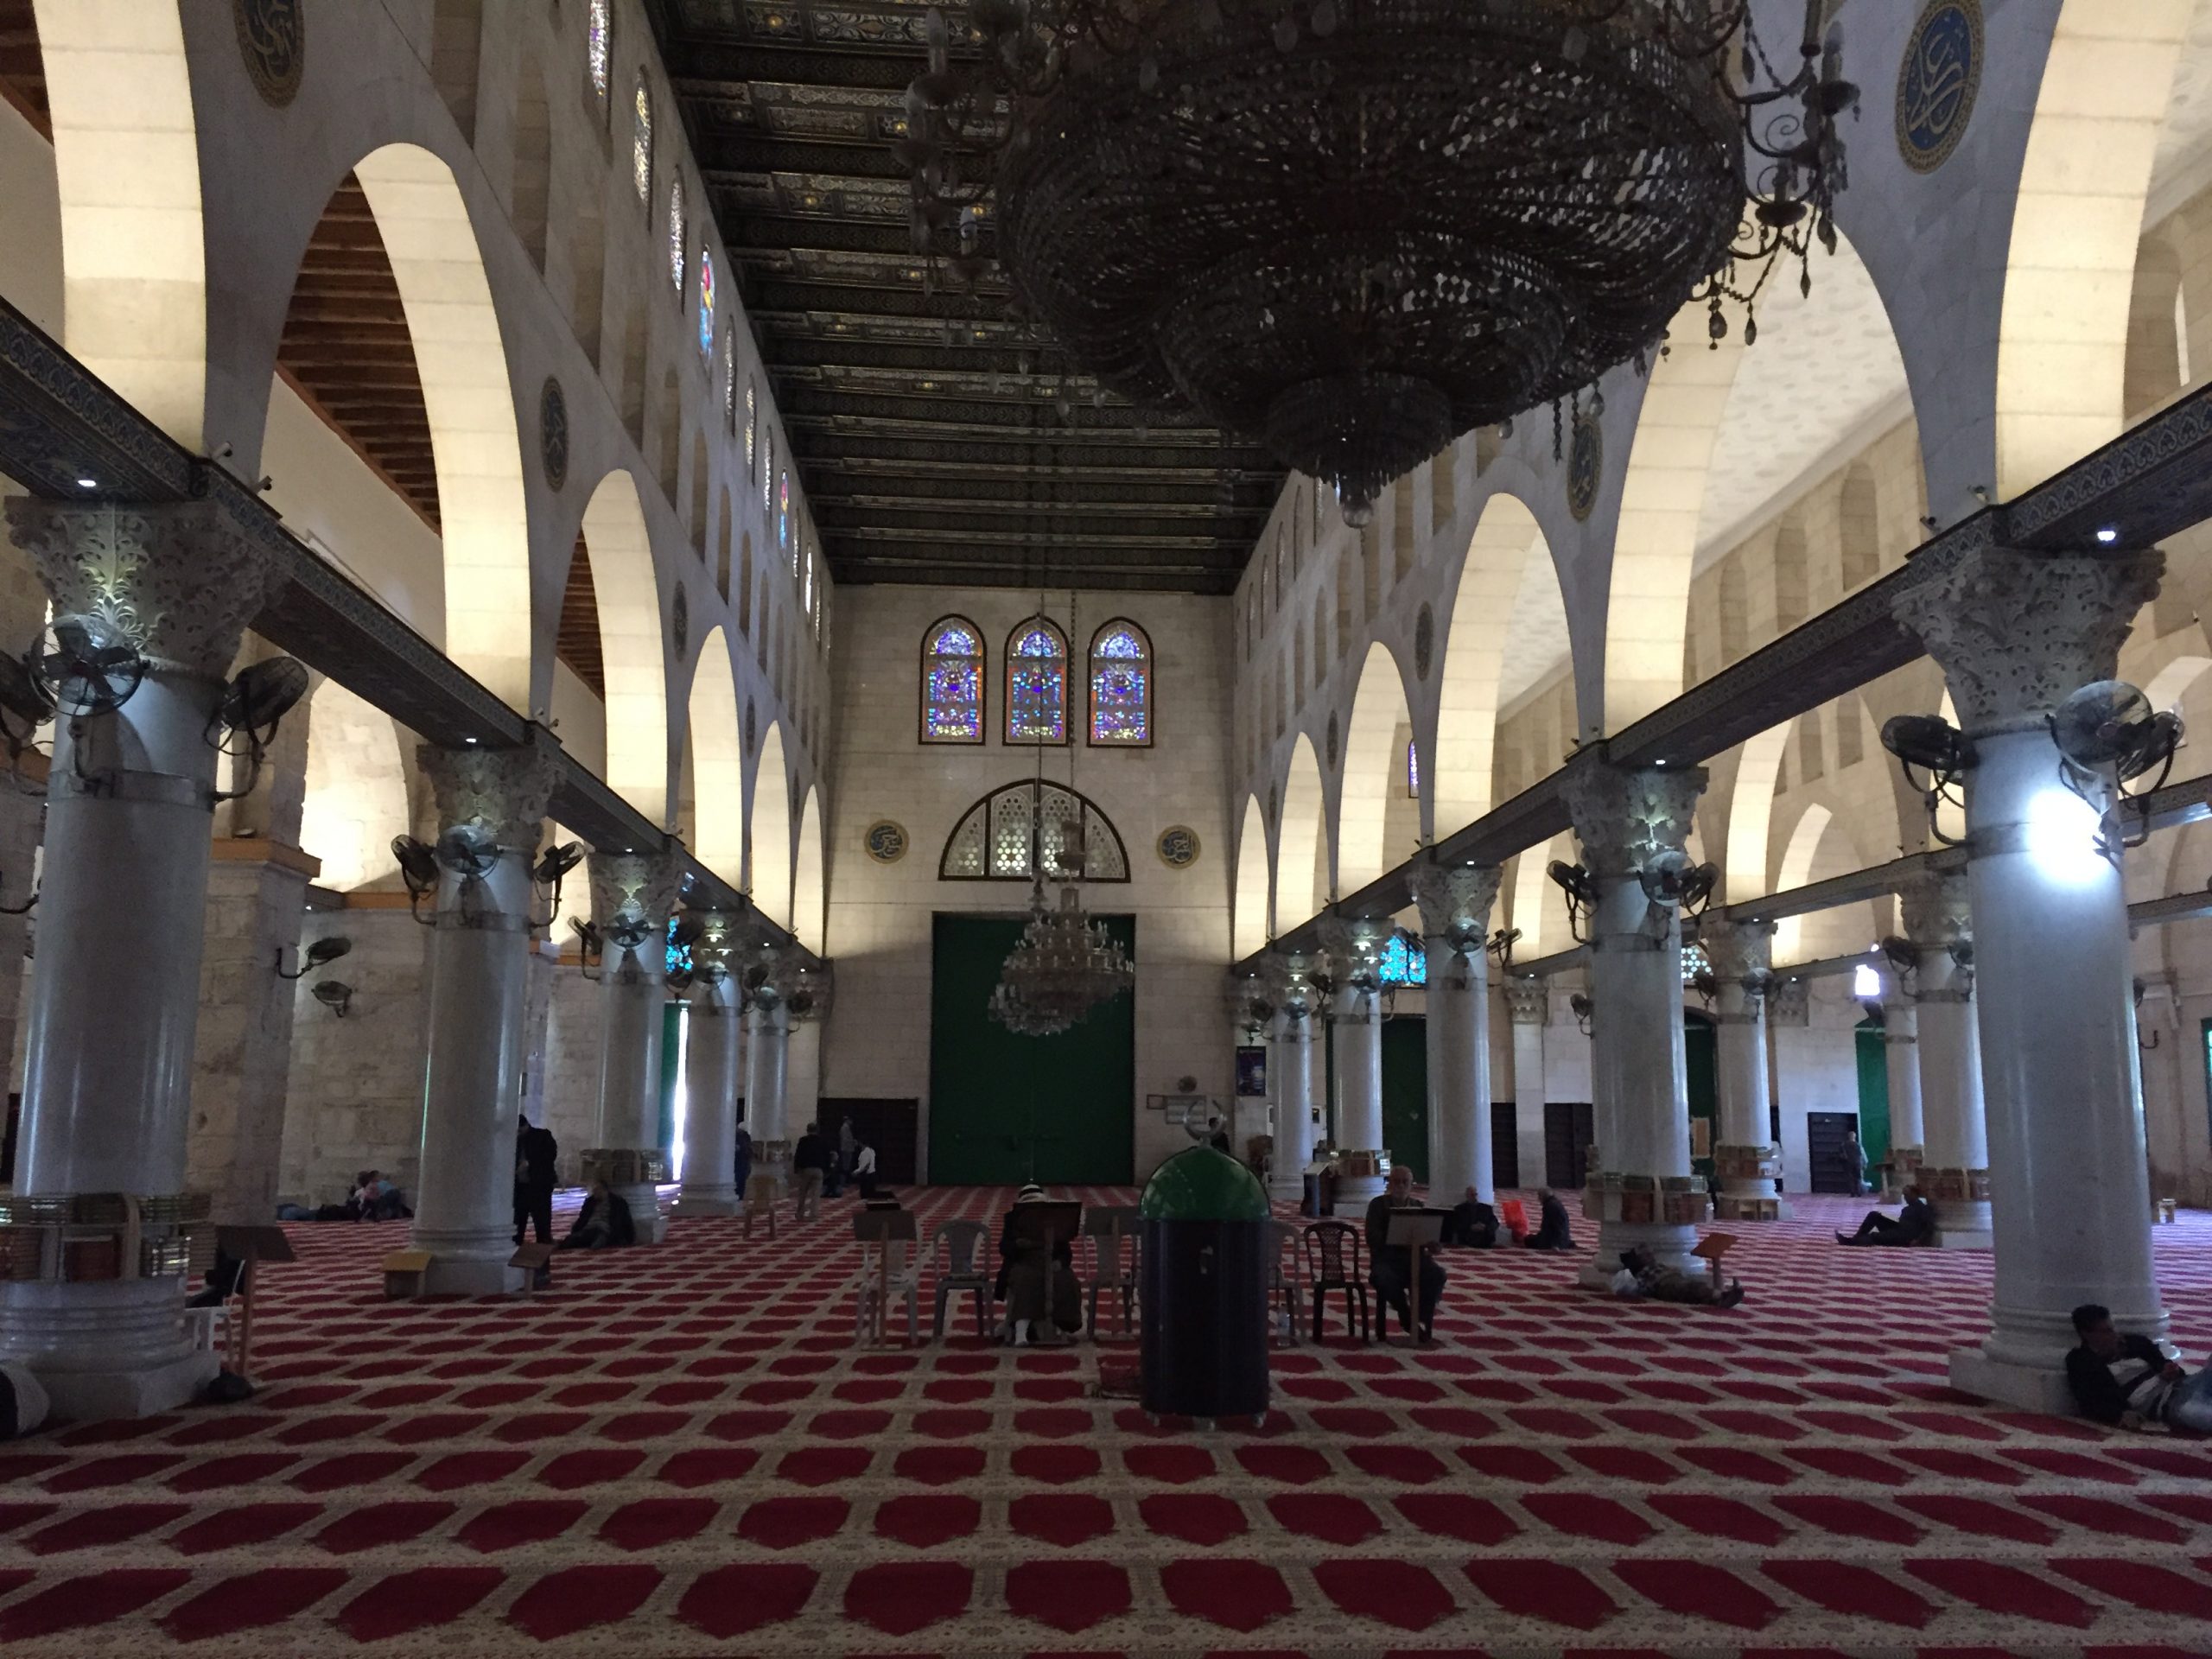 Jordan announces resumption of restoration at Al-Aqsa Mosque compound following Israeli obstruction of work